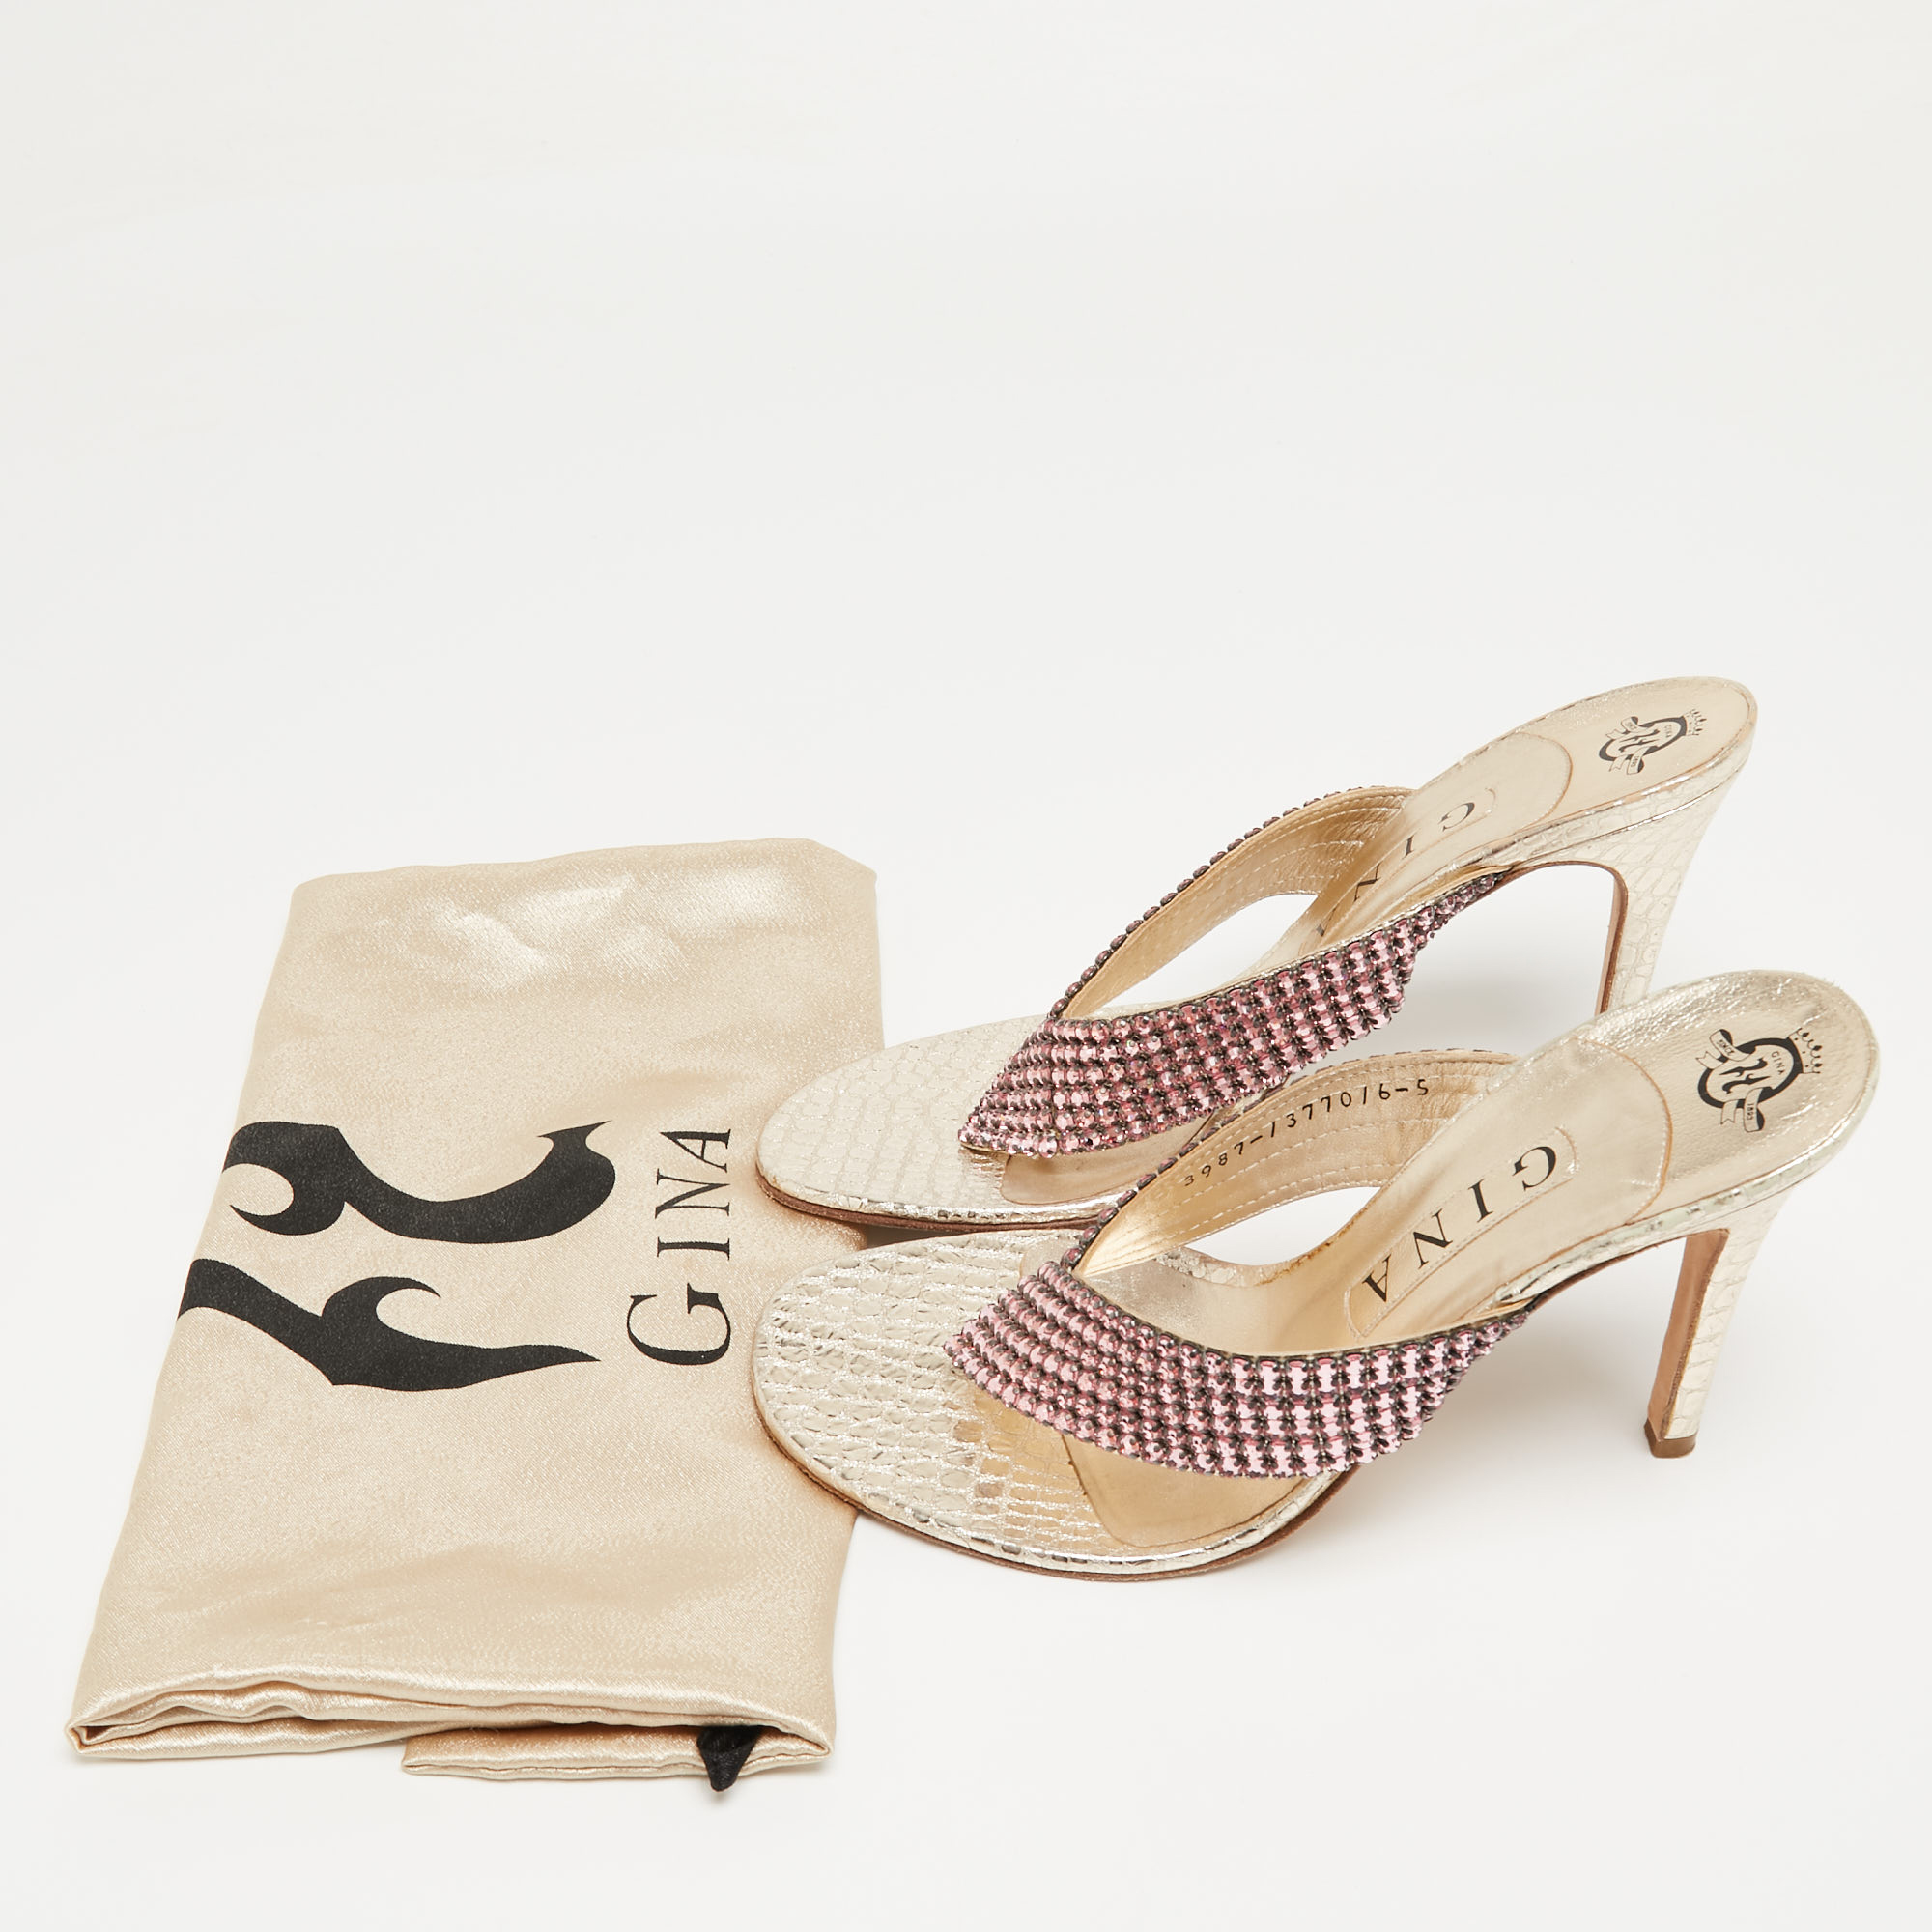 Gina Gold Leather Crystal Embellished Thong Sandals Size 38